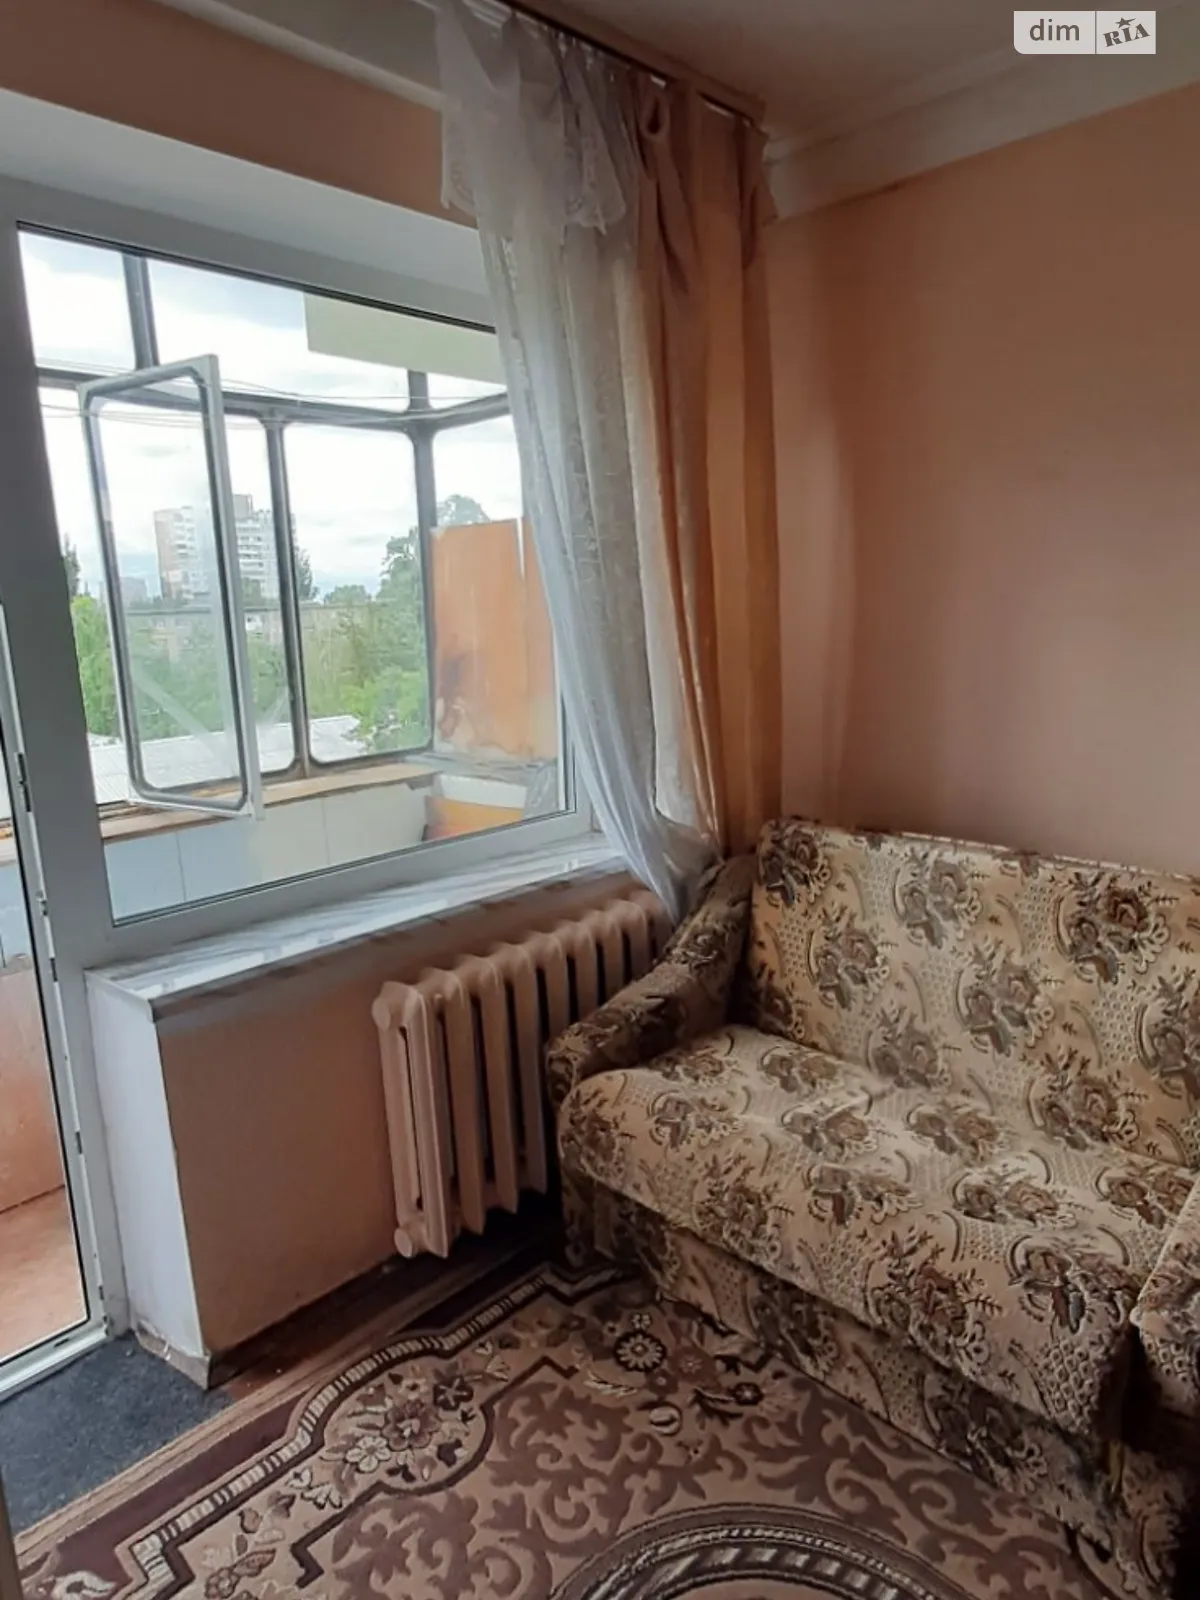 Продается комната 23.6 кв. м в Киеве, цена: 13200 $ - фото 1